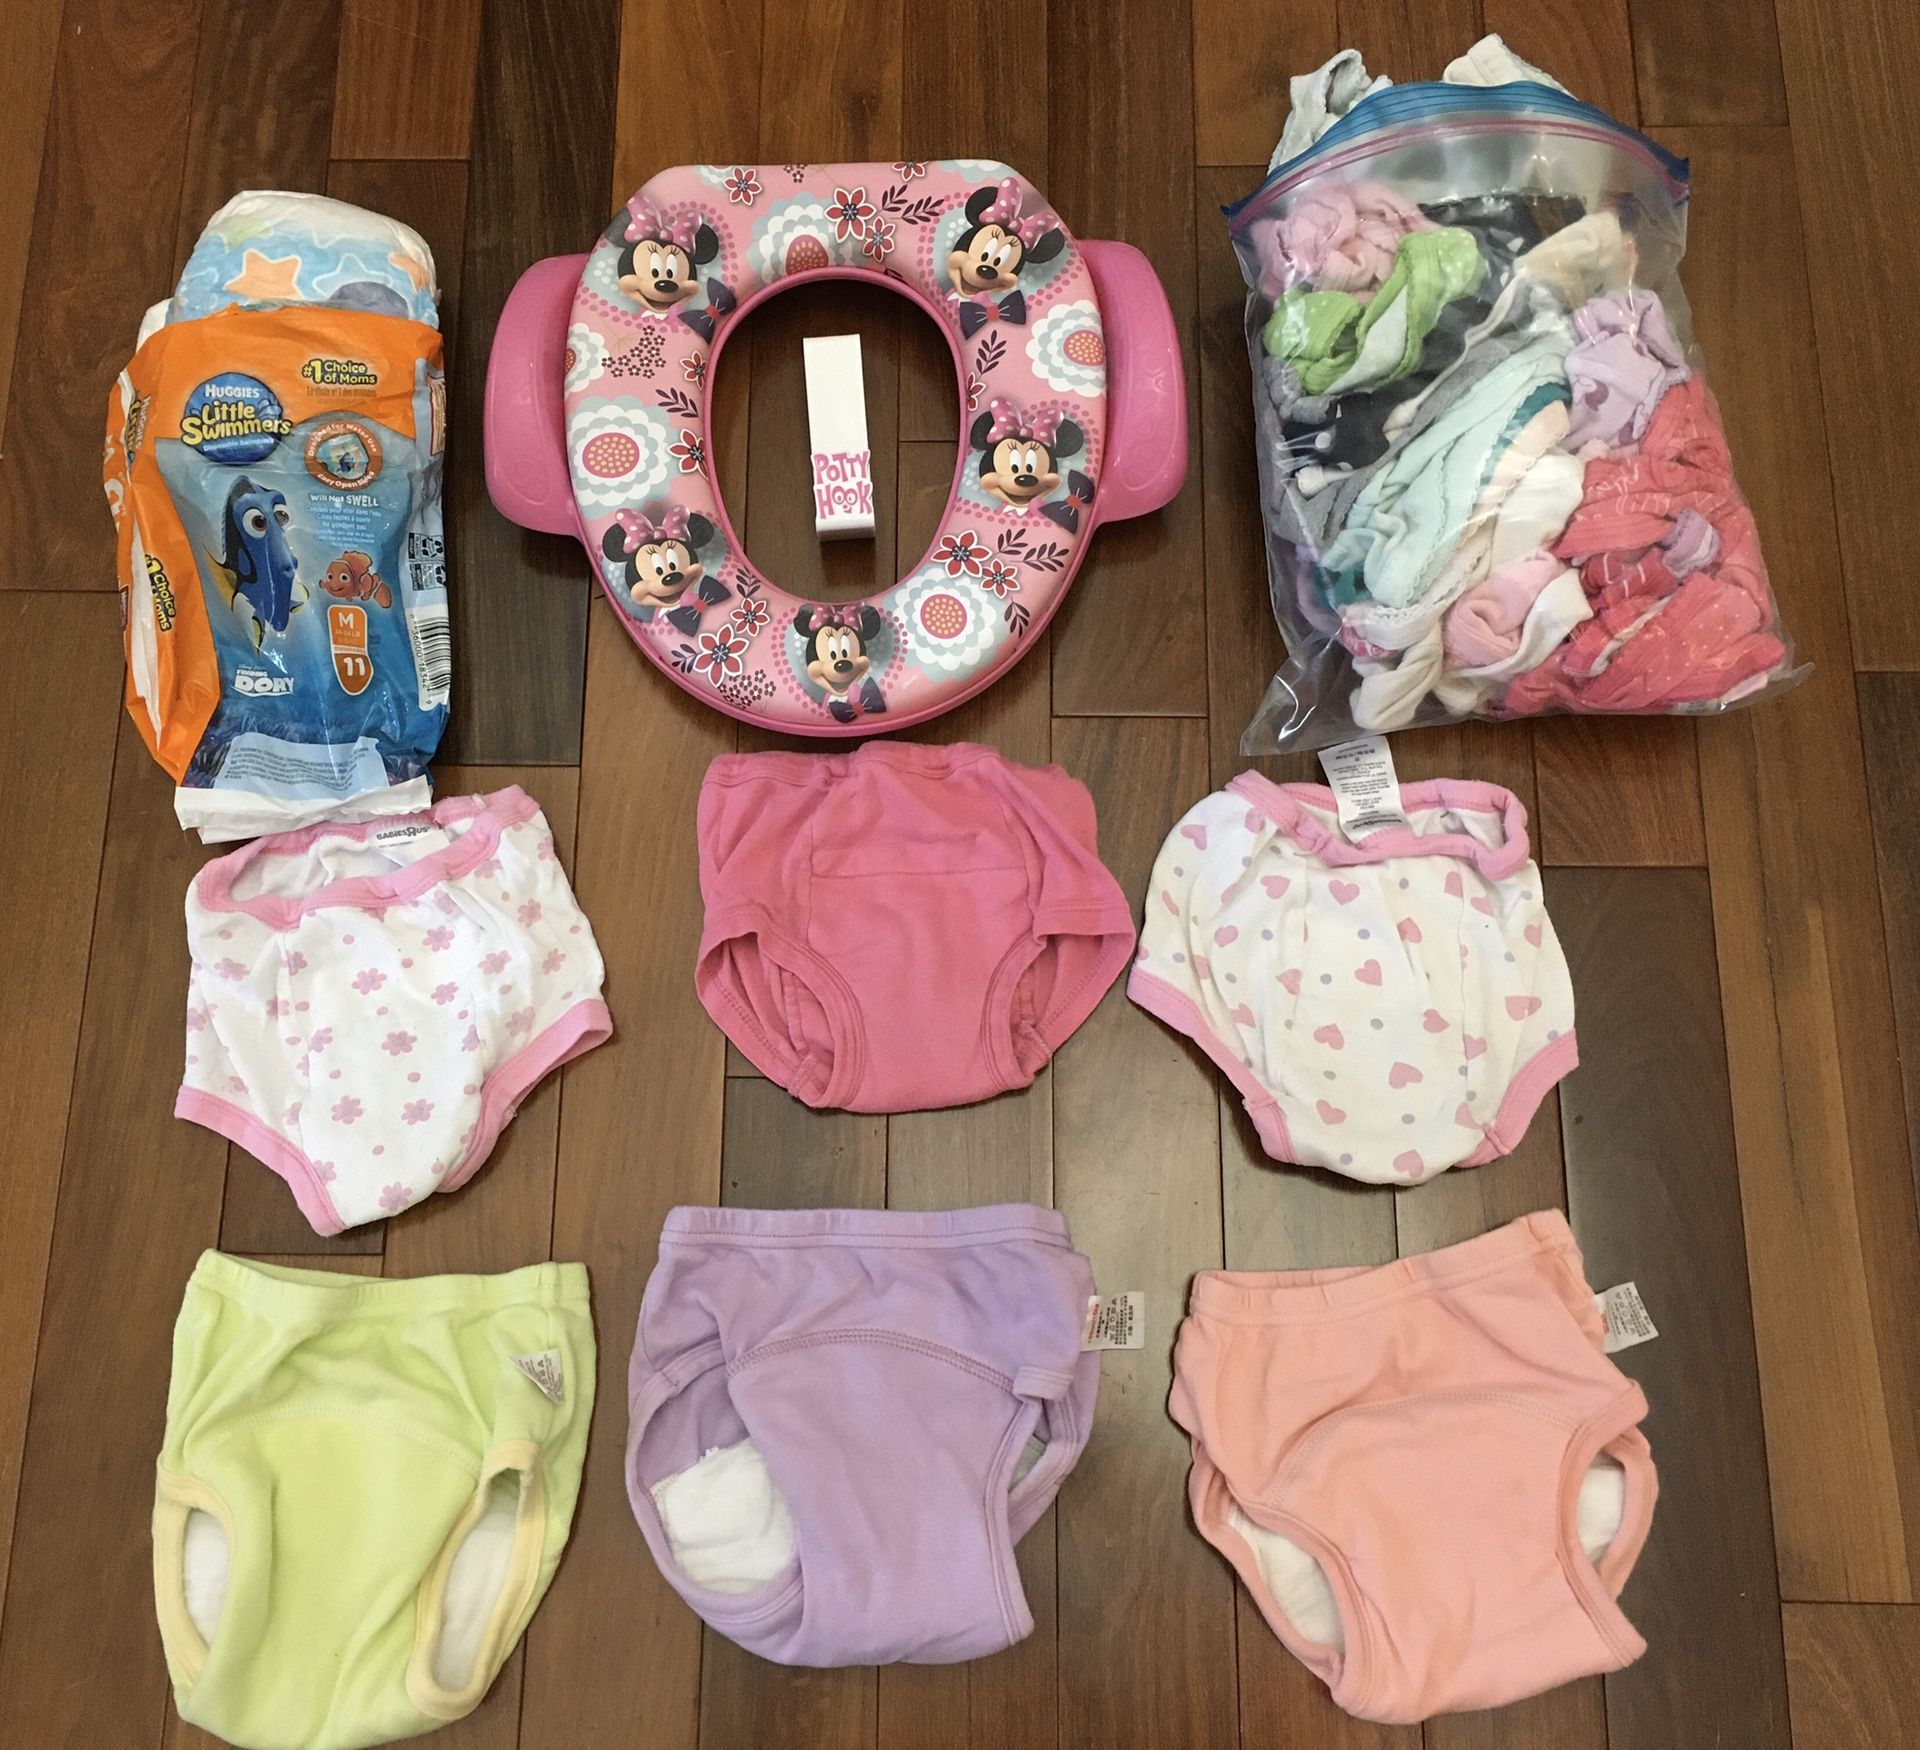 Girls potty training lot - Minnie Mouse potty seat - little swimmers swim diapers - training pants - GAP underwear